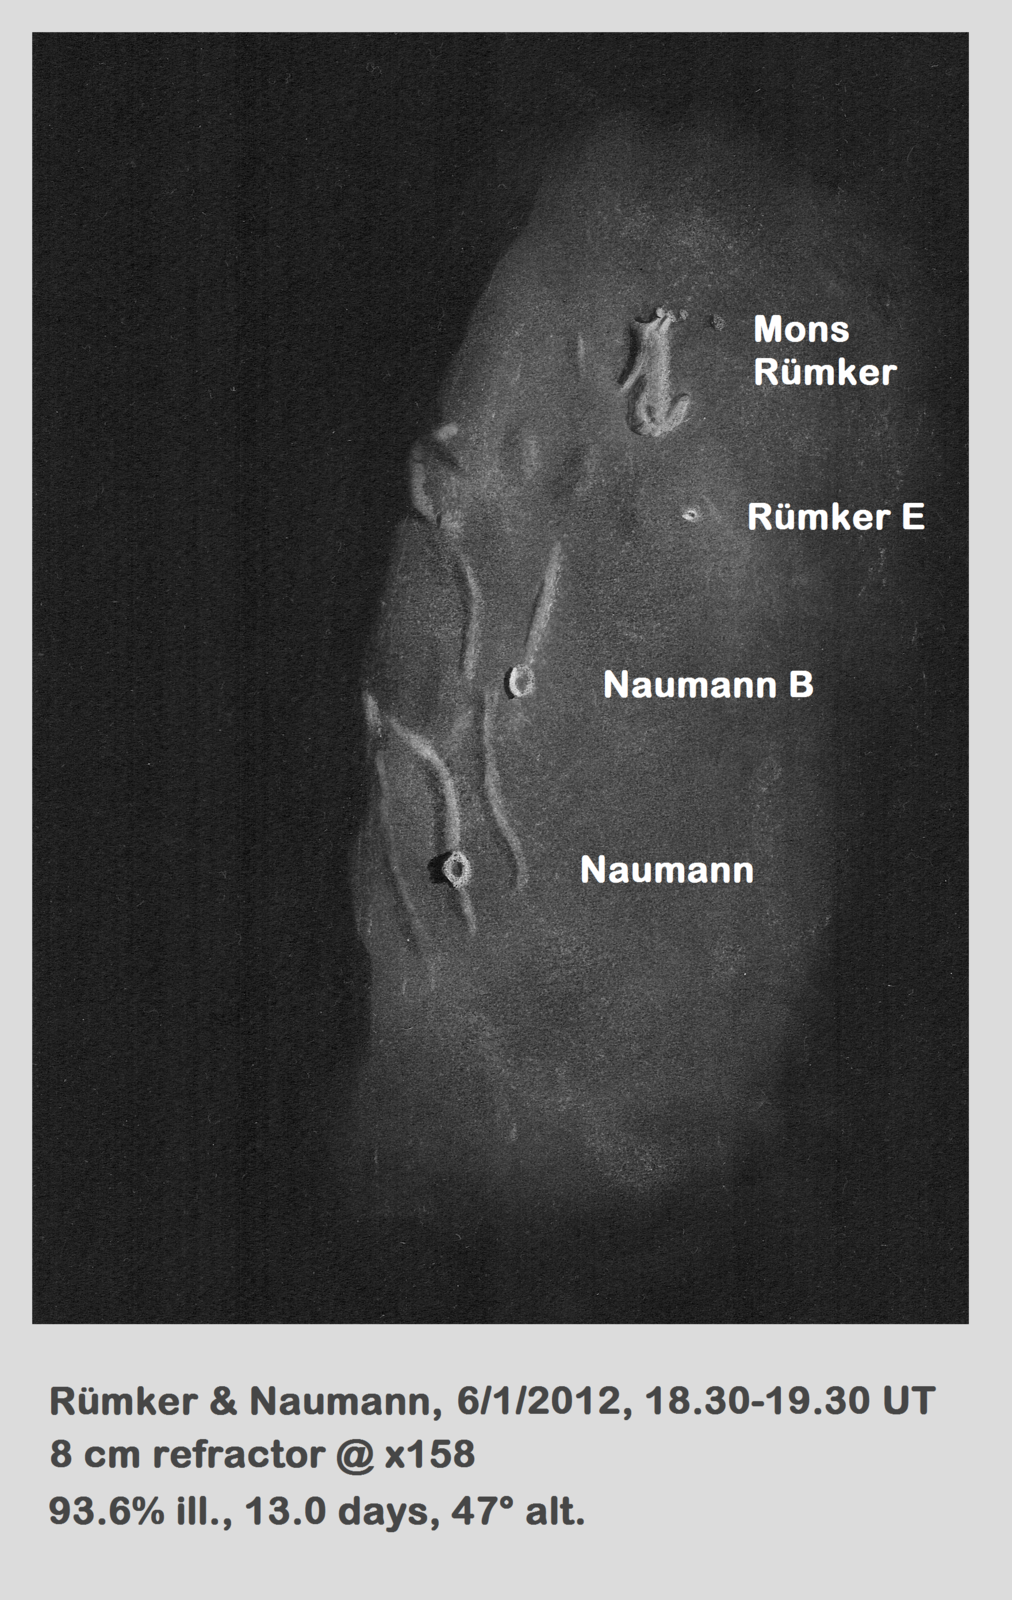 Lunar 062: Mons Rümker (large volcanic dome)